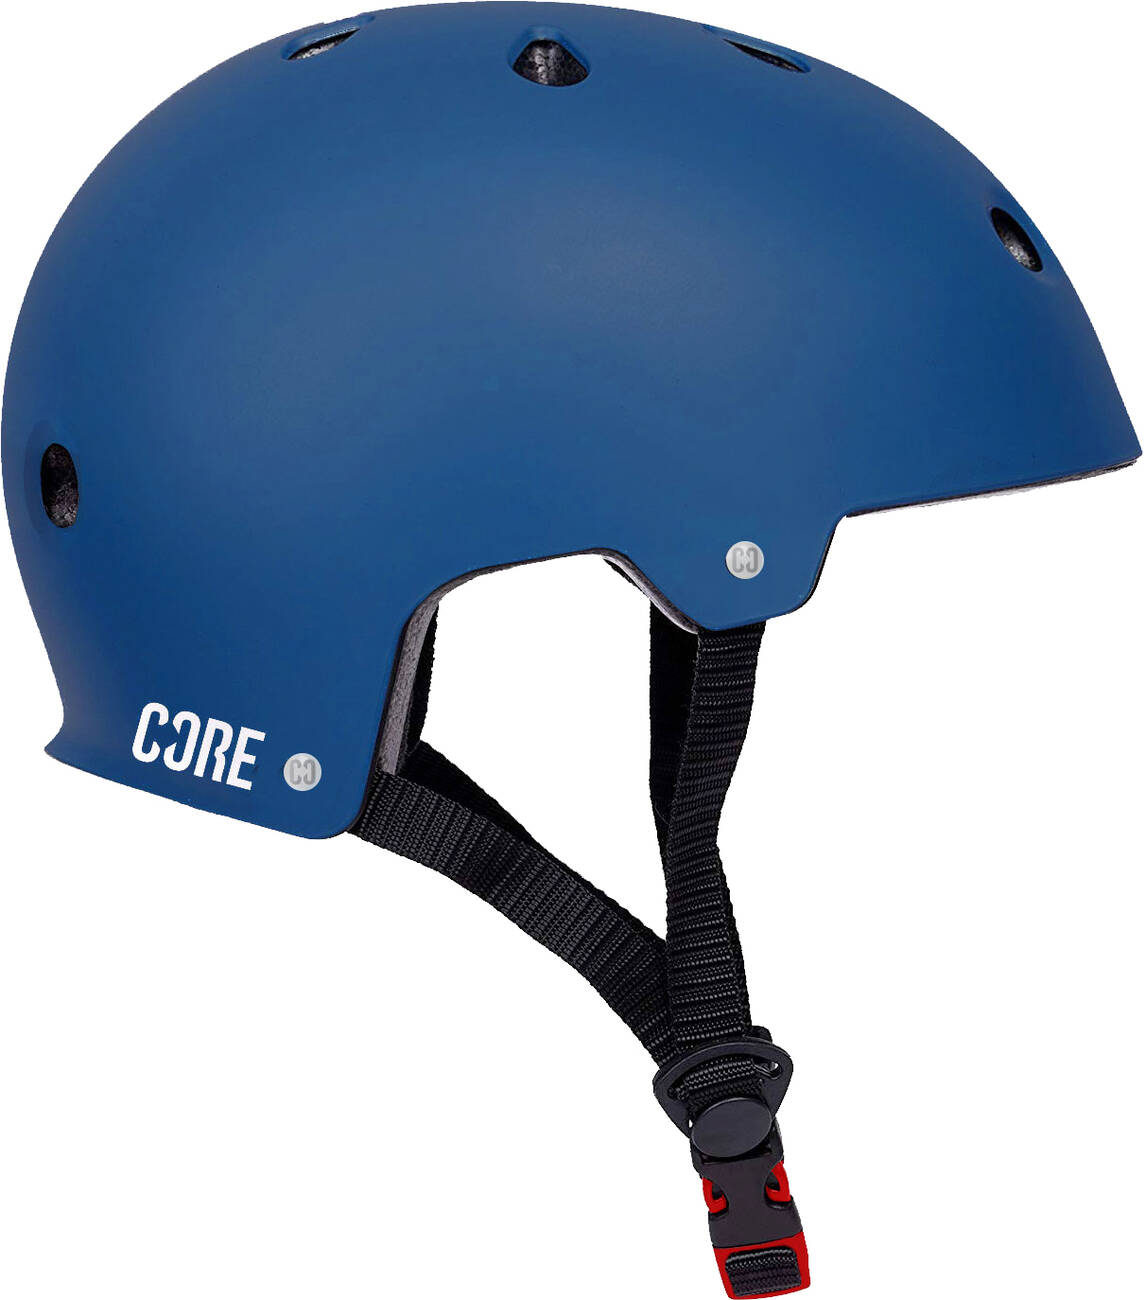 CORE Action Sports Helmet - Navy Blue